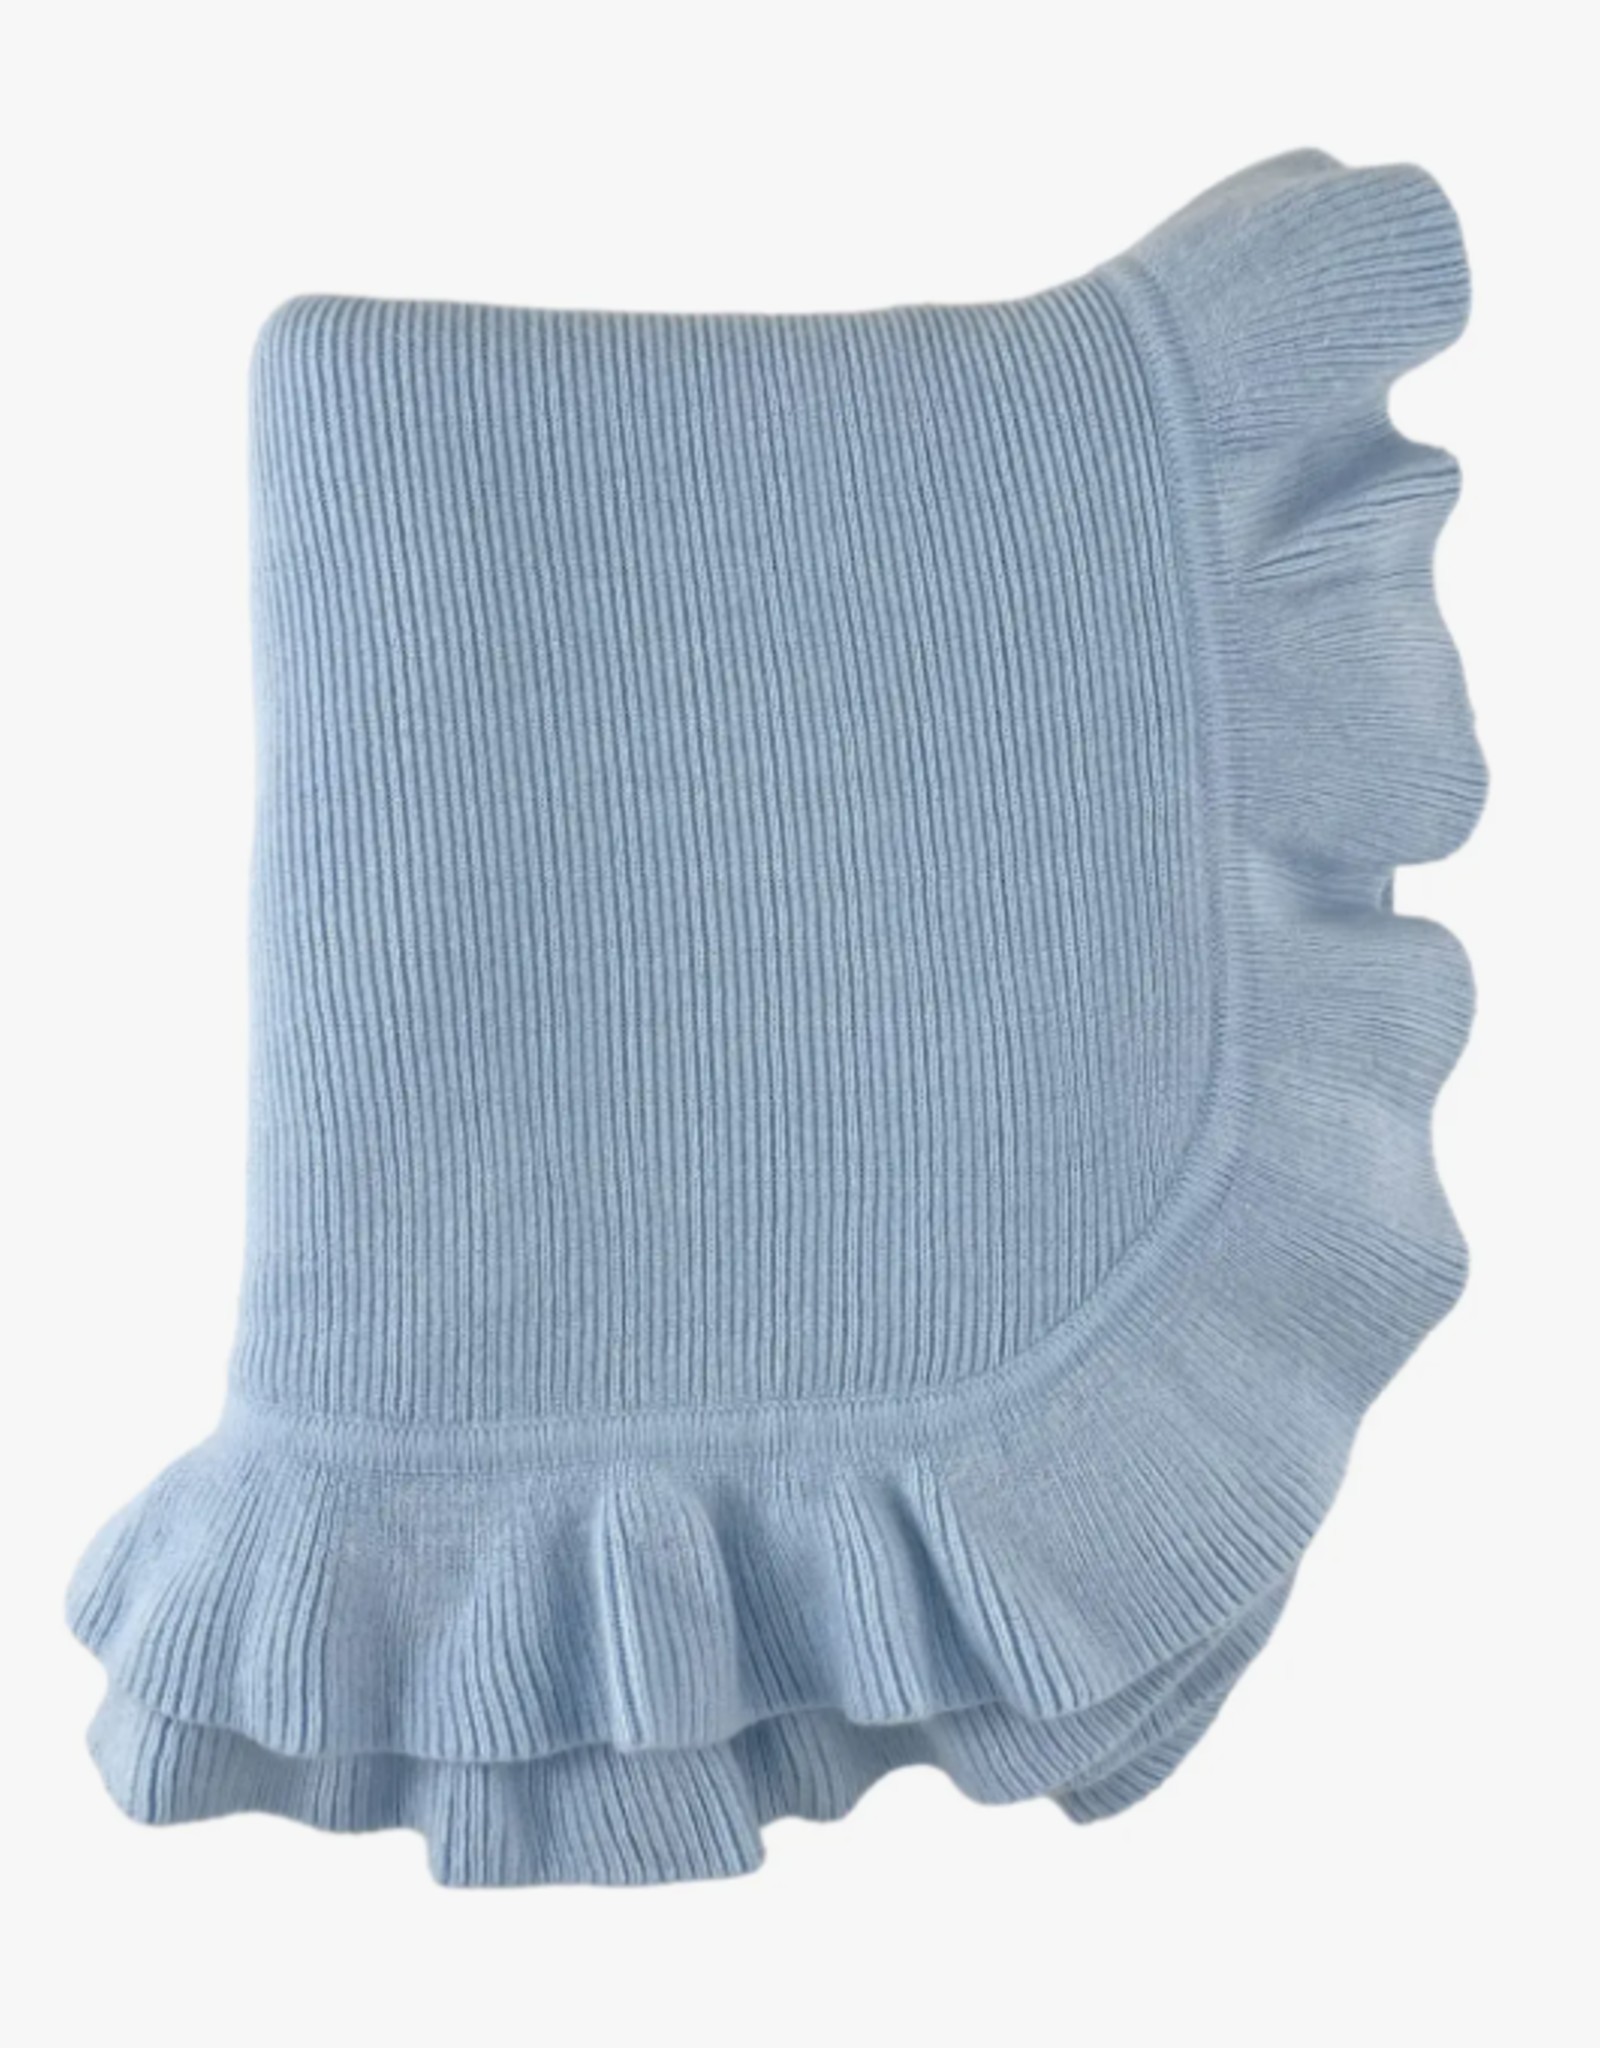 A Soft Idea Blue Ruffle Baby Blanket